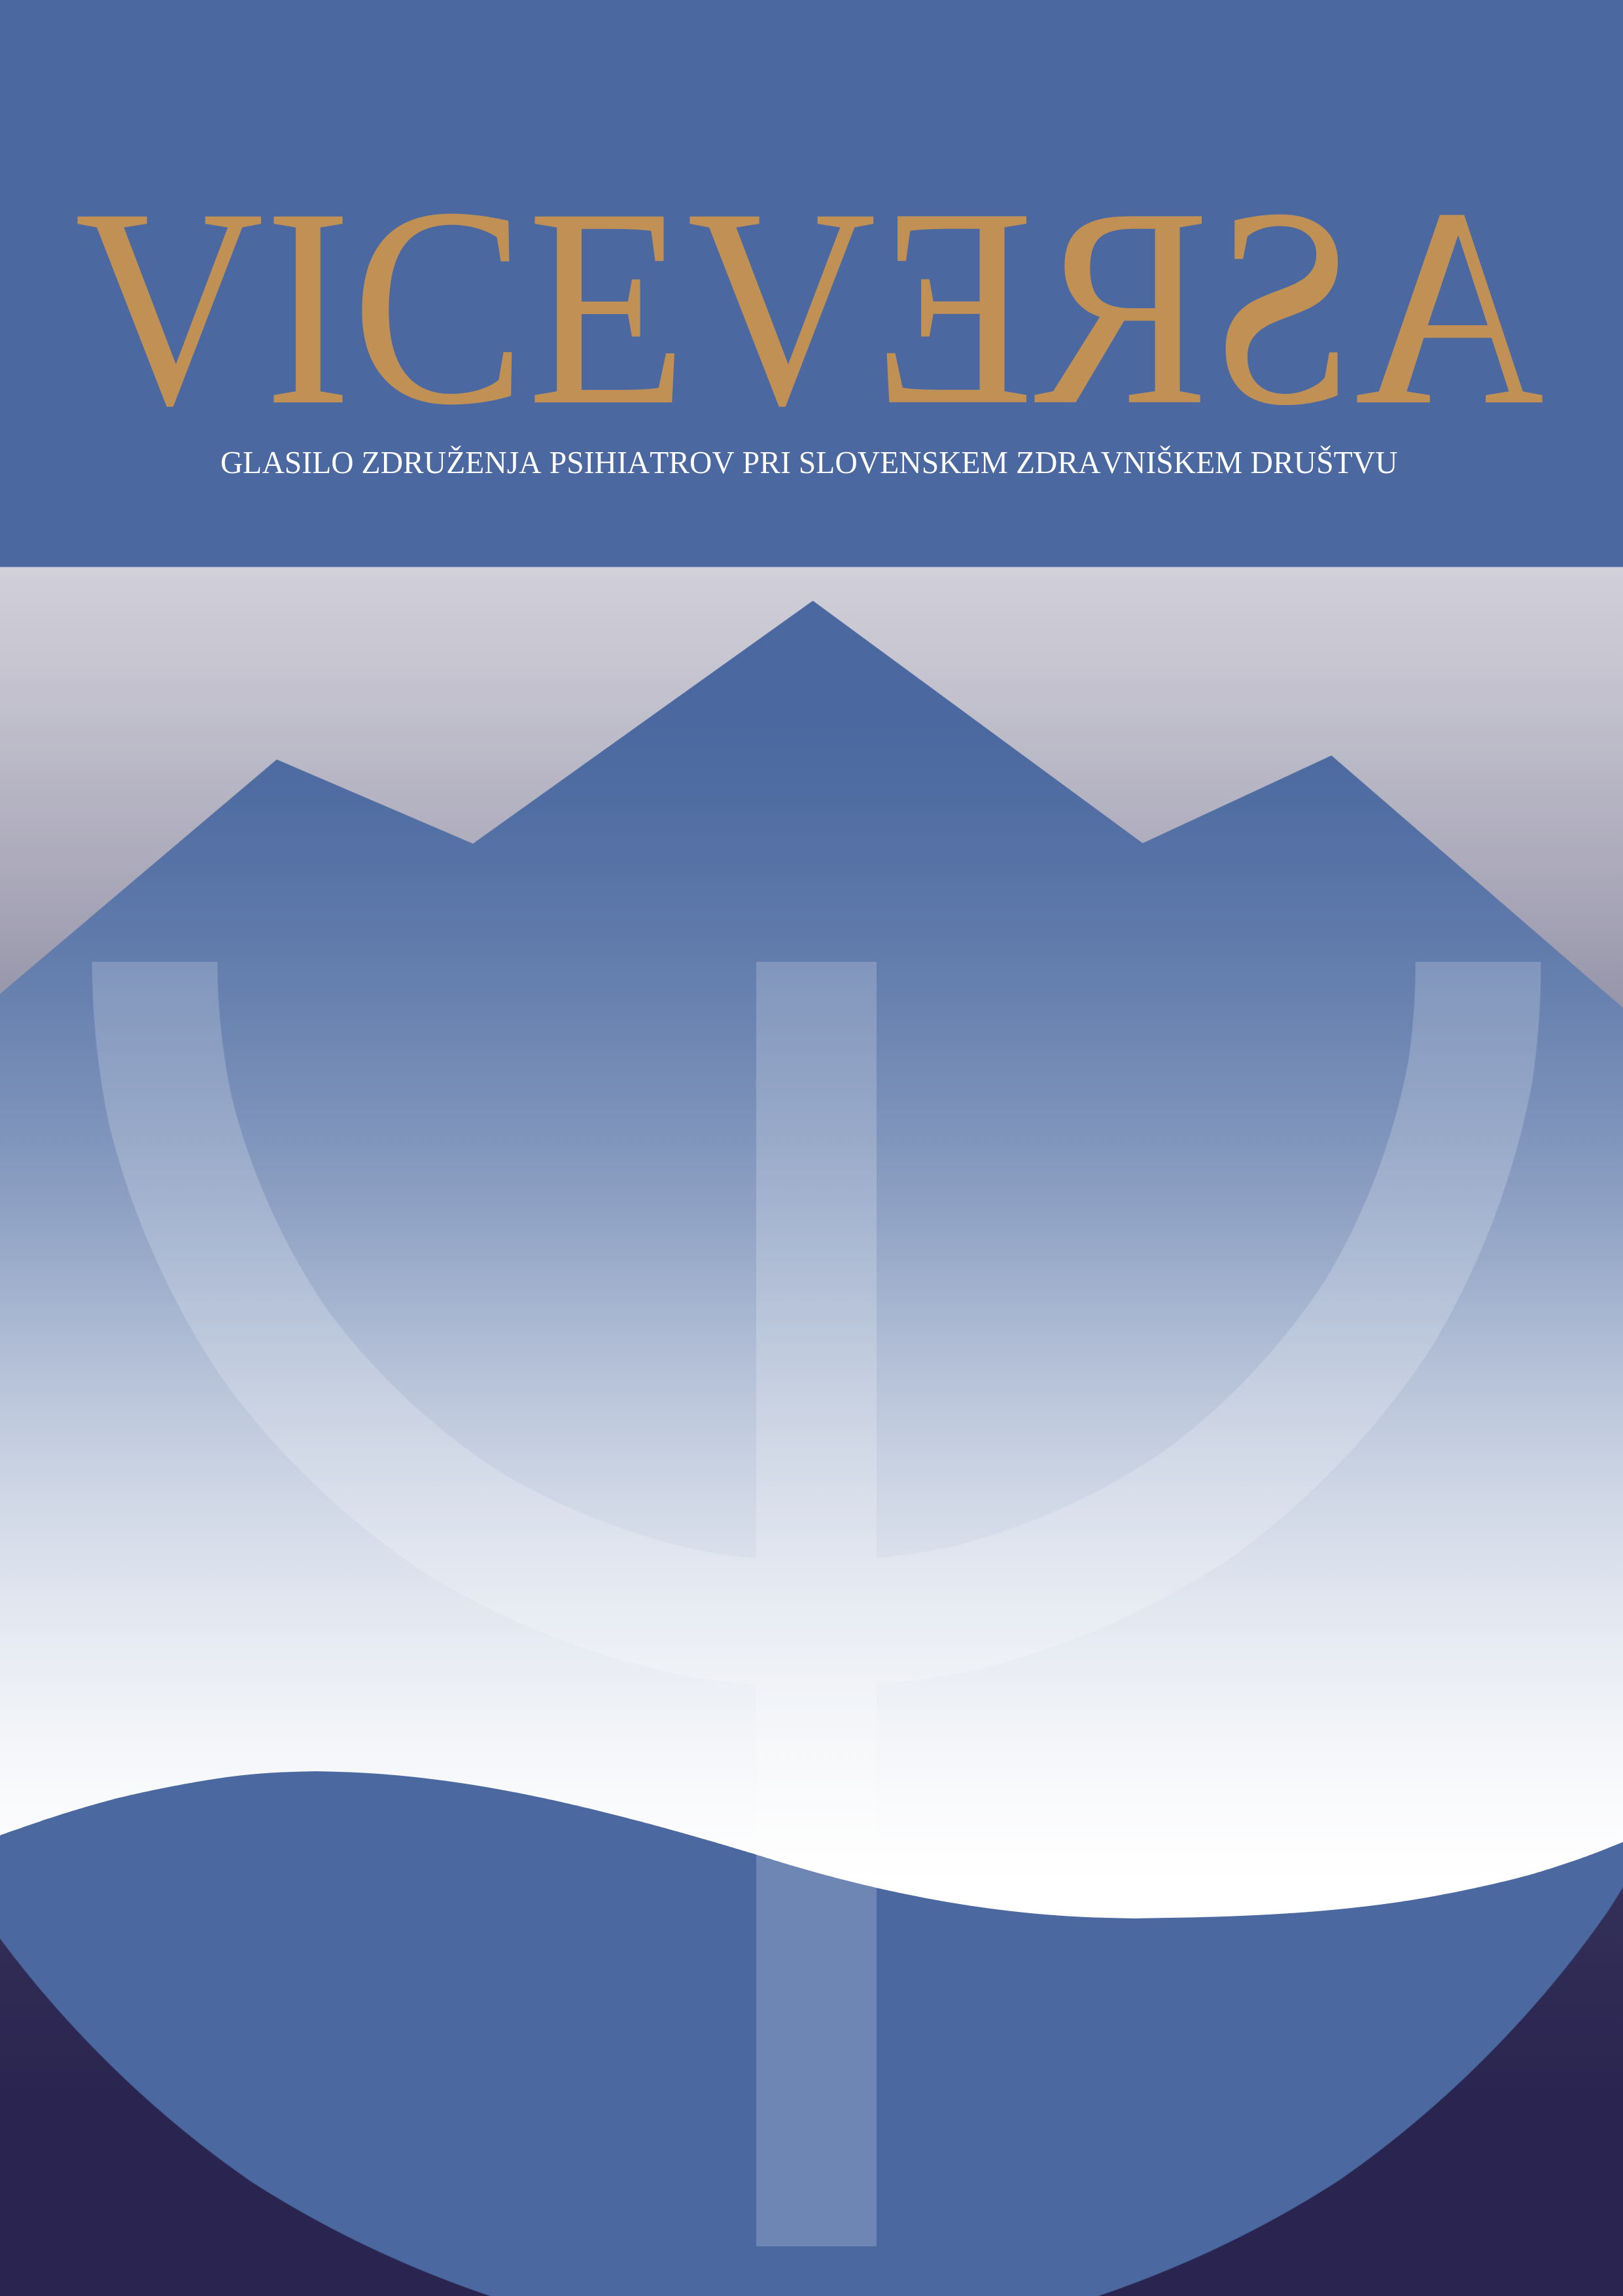 Naslovnica revije Viceversa, modra z zlatim besedilom. 